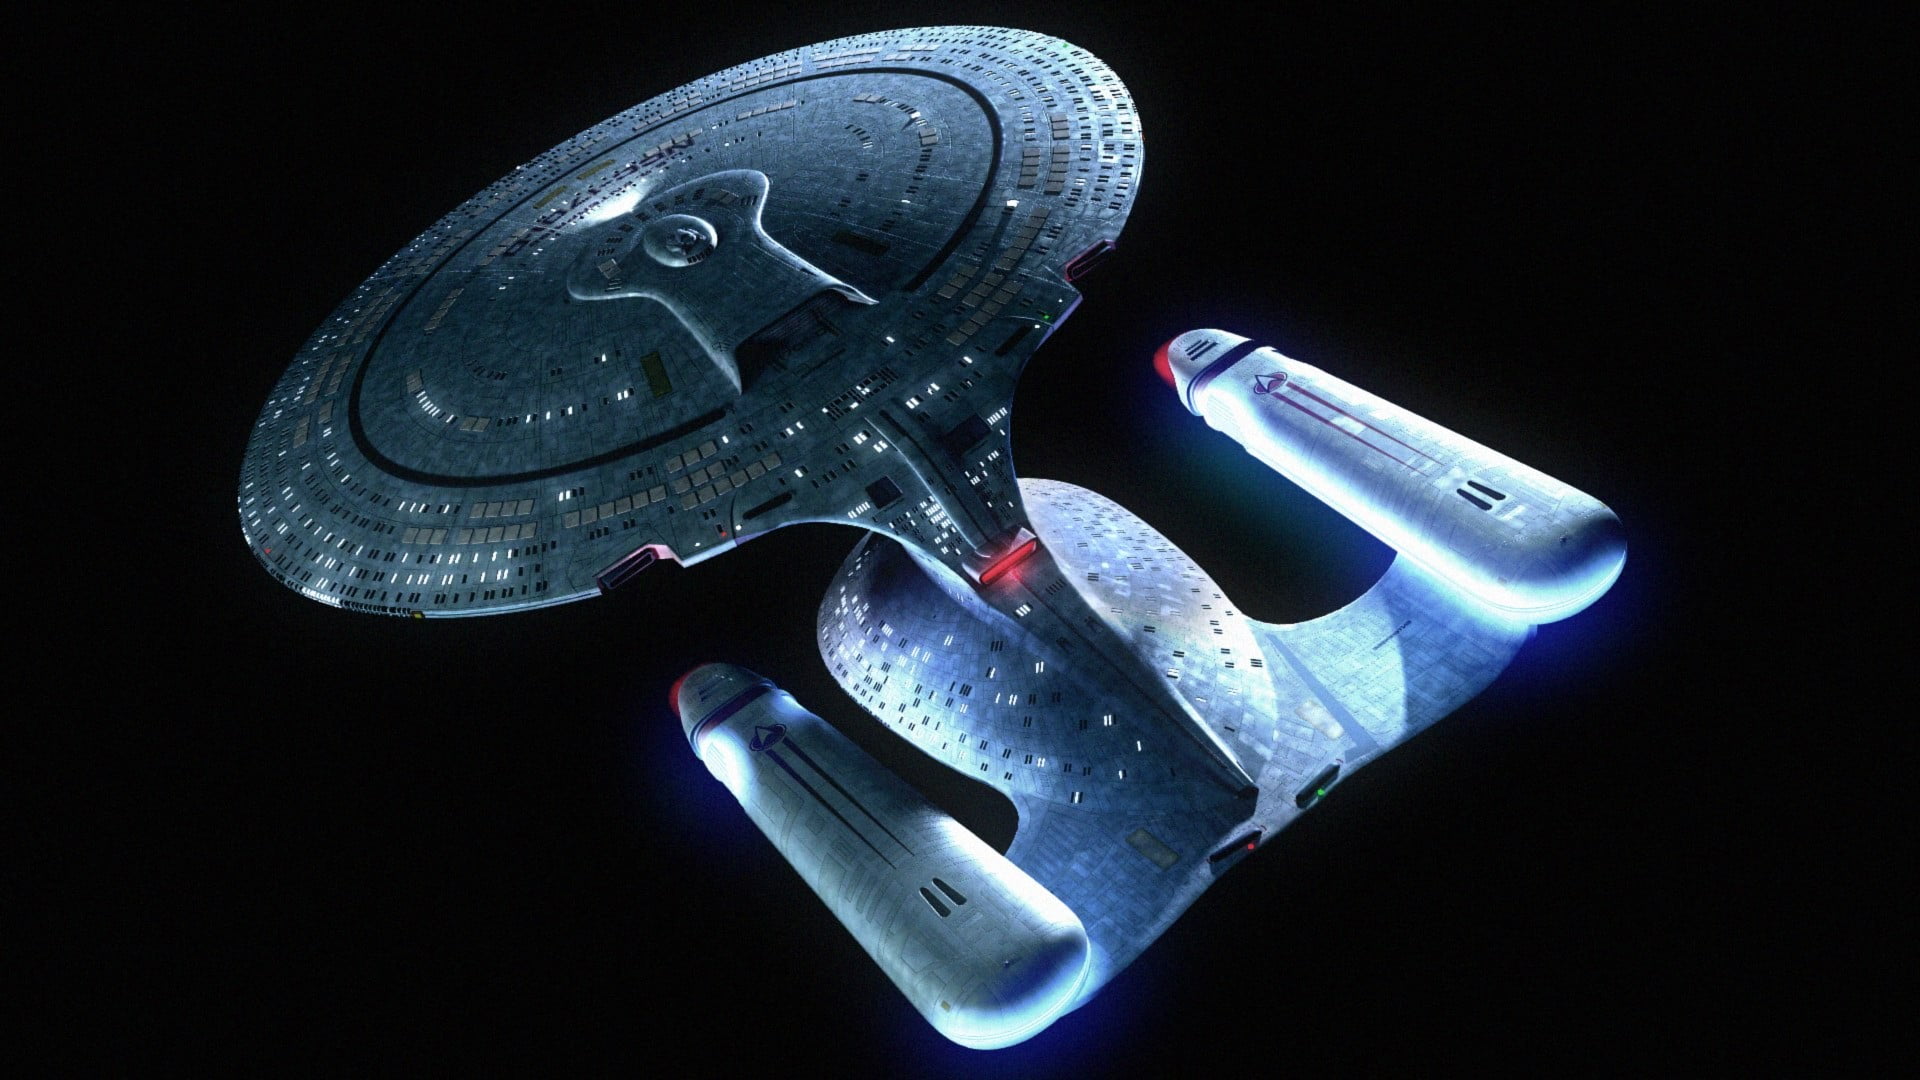 Gray And Black Space Ship Star Trek Uss Enterprise Spaceship Images, Photos, Reviews